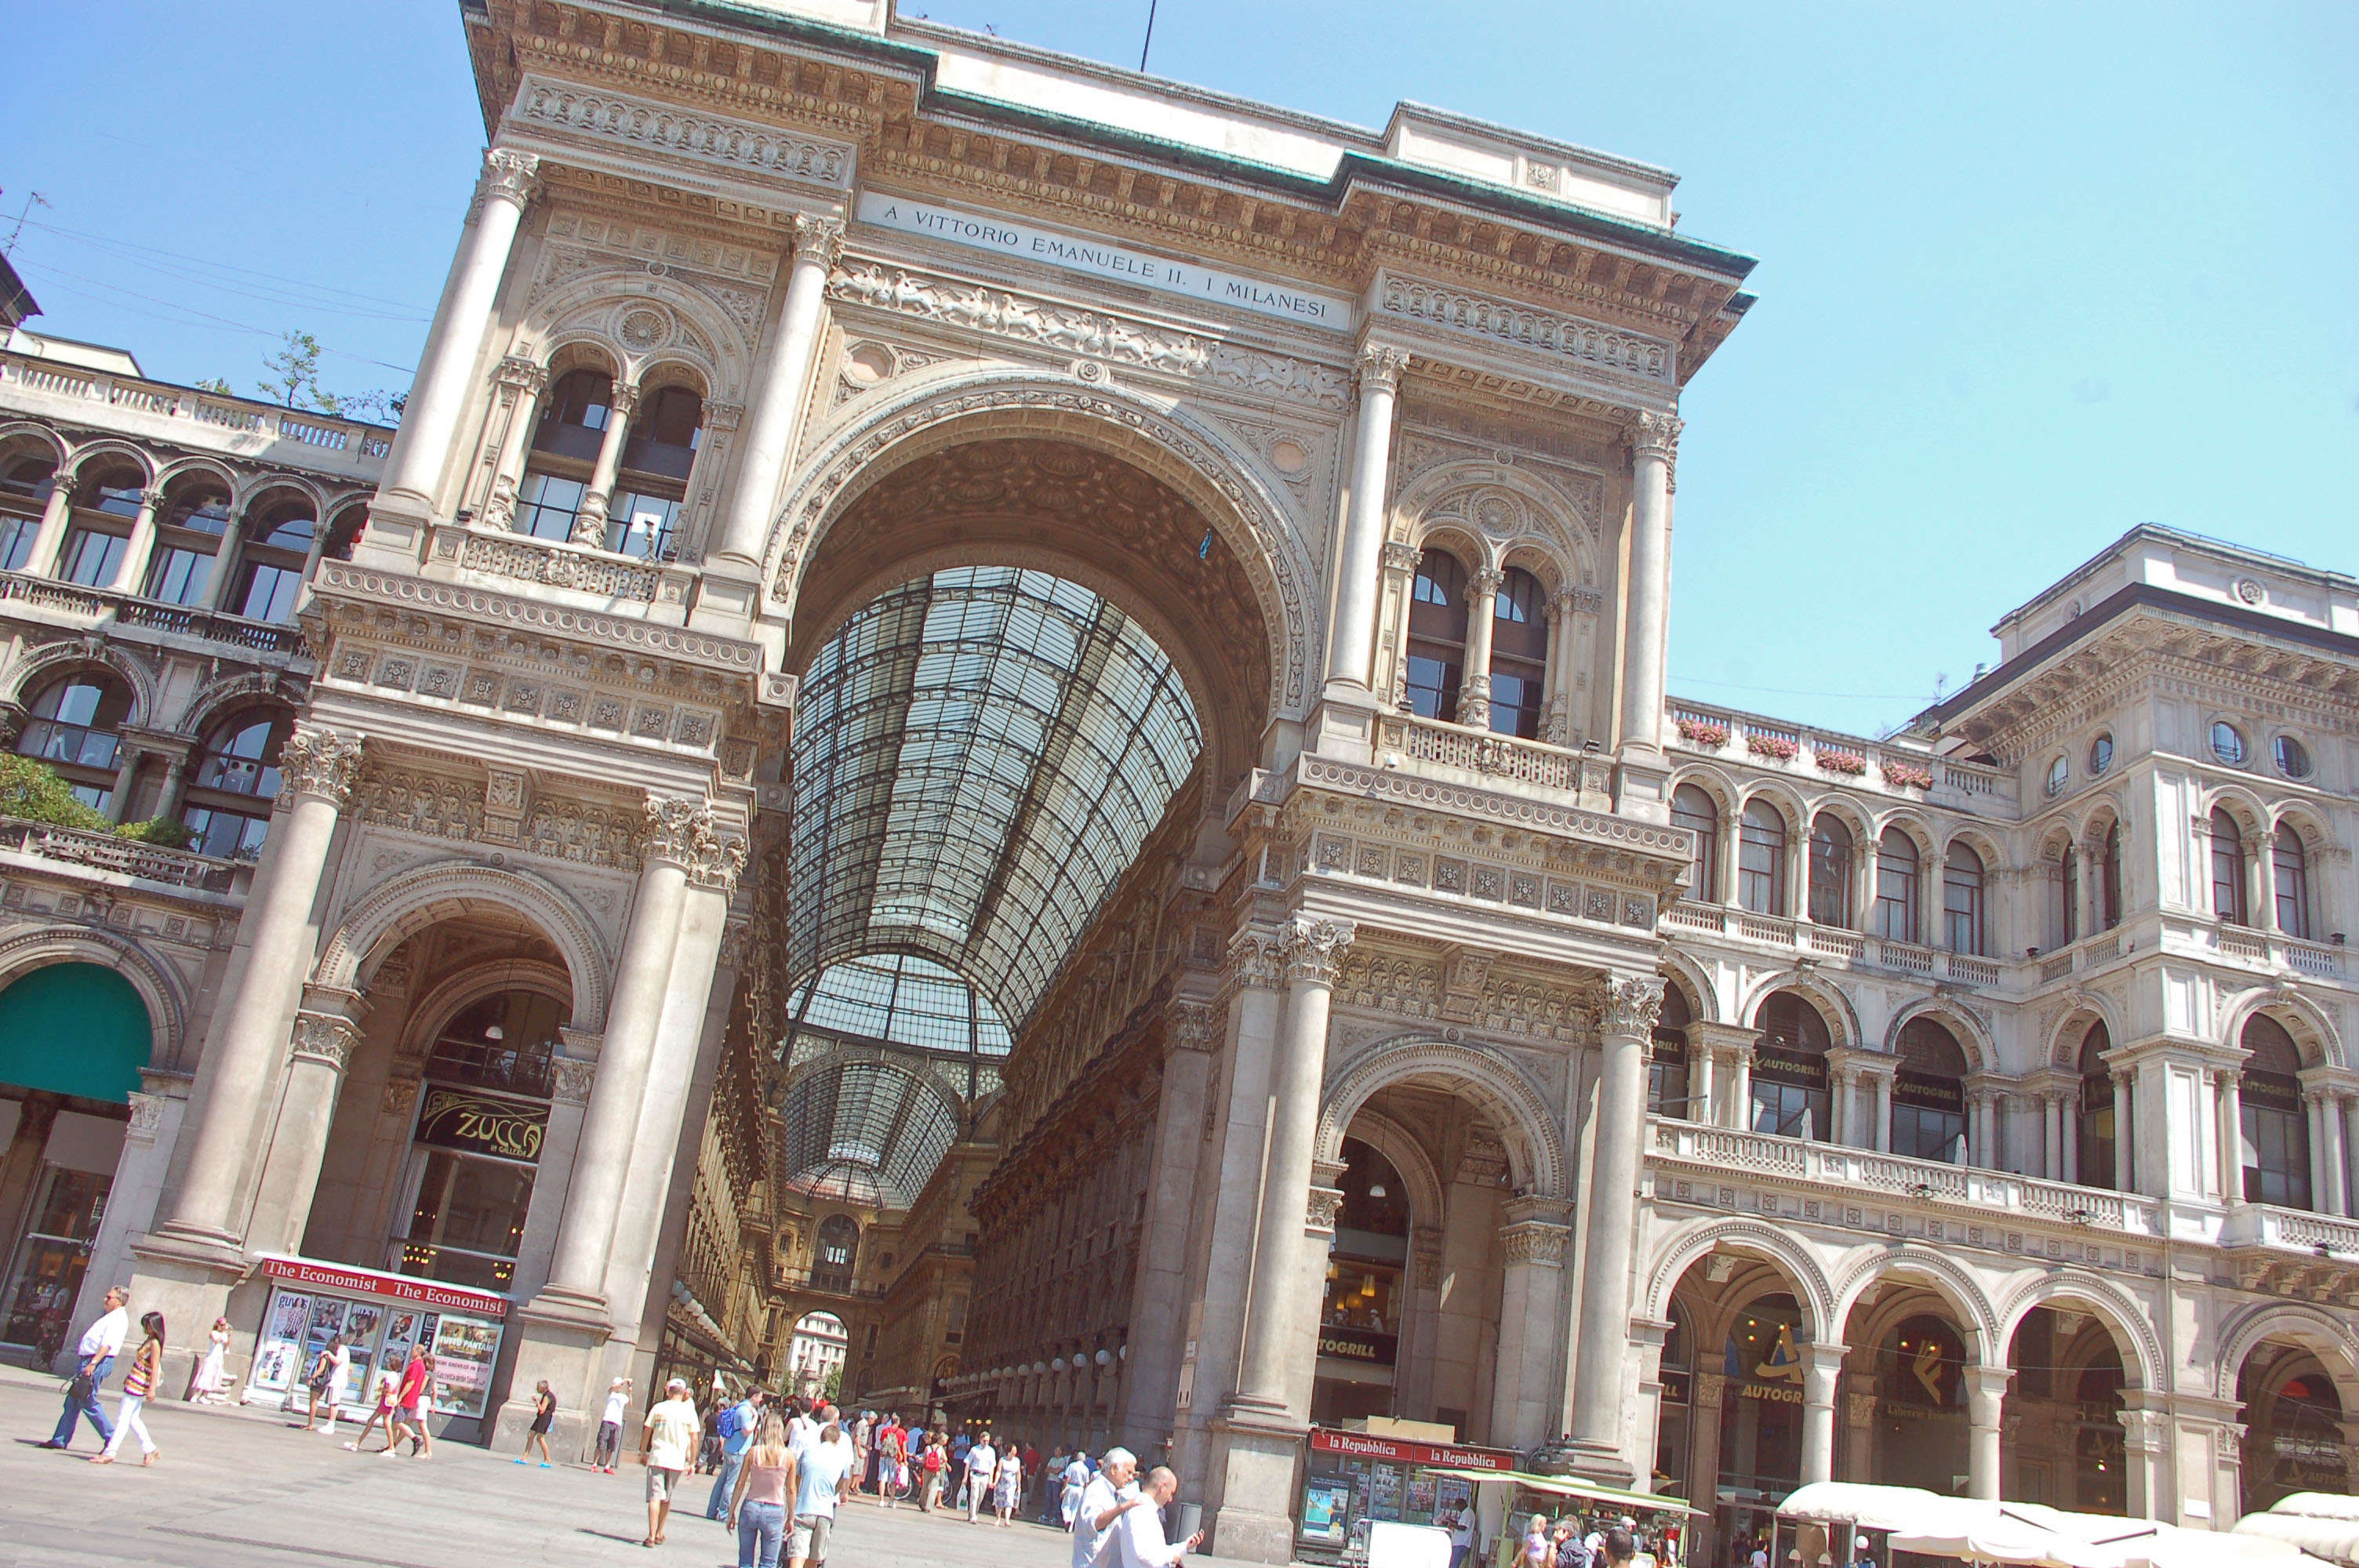 Galleria Vittorio Emanuele II, Sightseeing